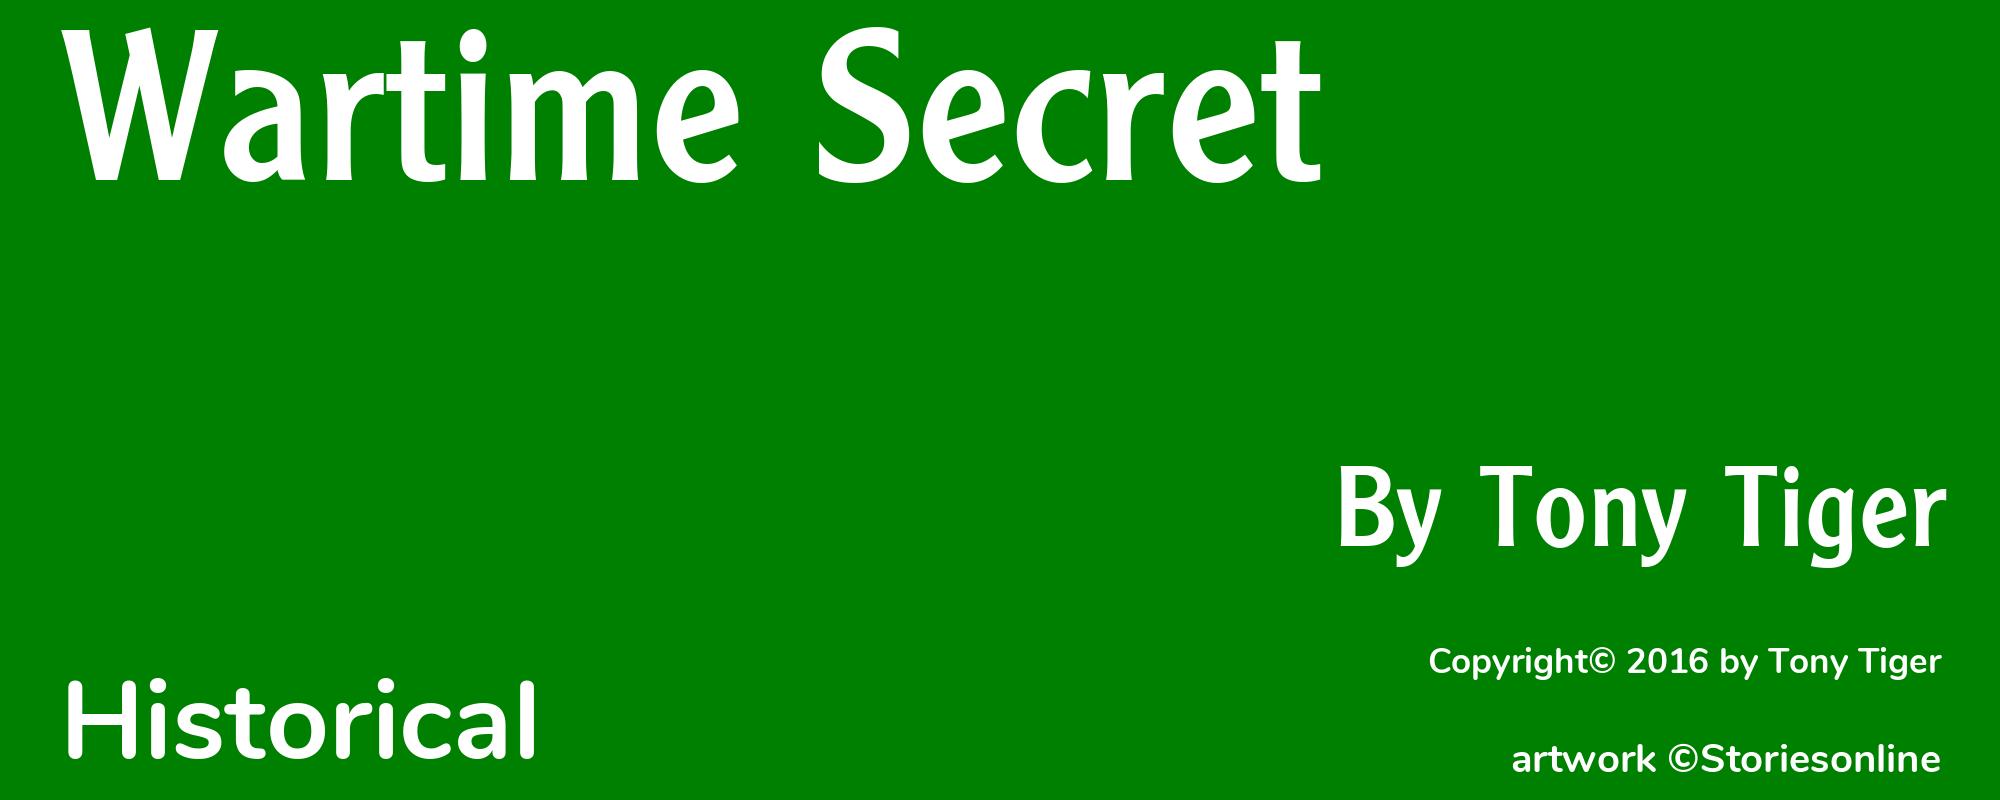 Wartime Secret - Cover